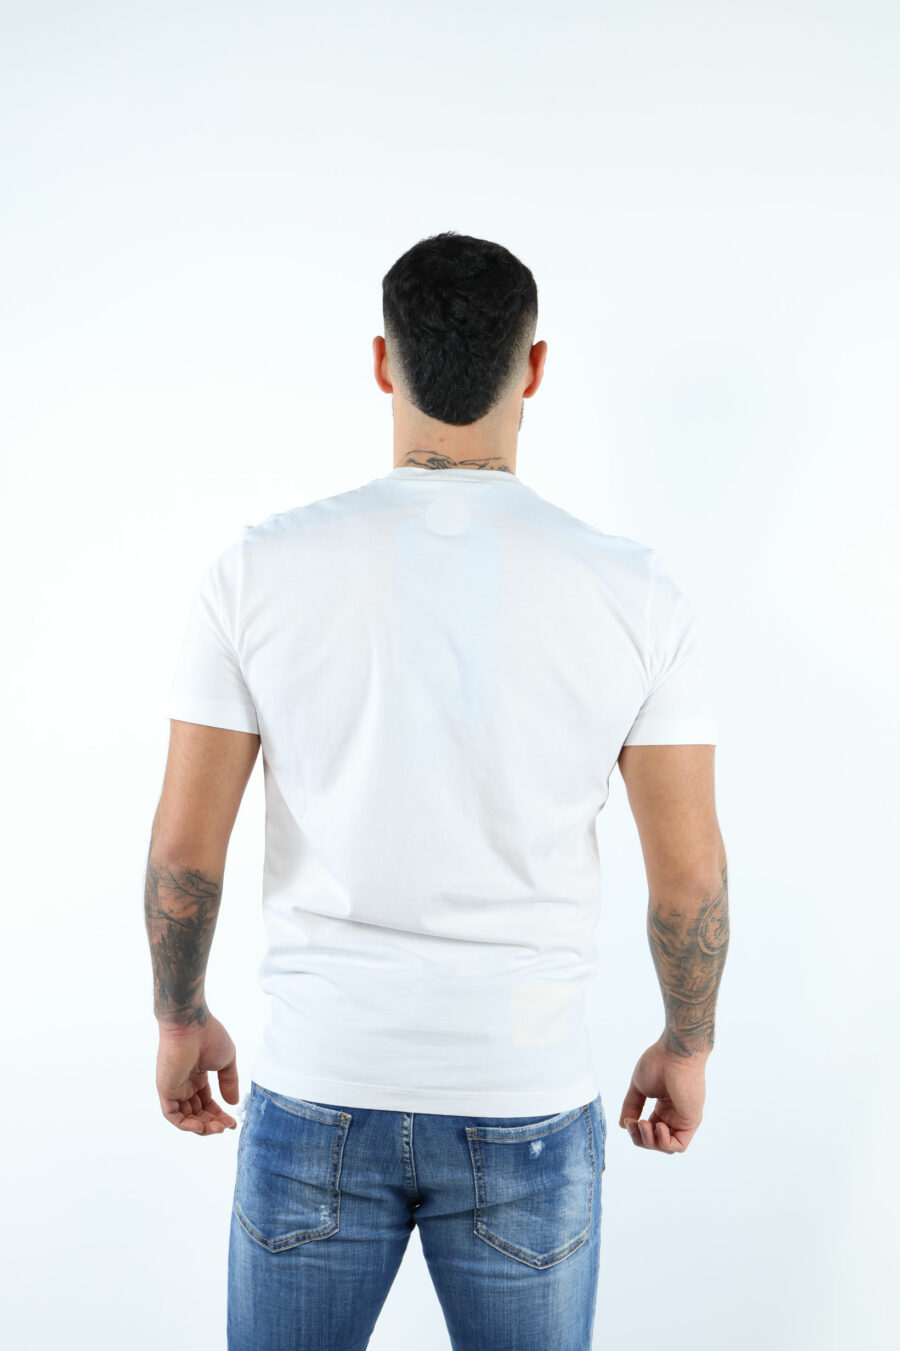 Camiseta blanca con minilogo "ceresio 9, milano" - 106606